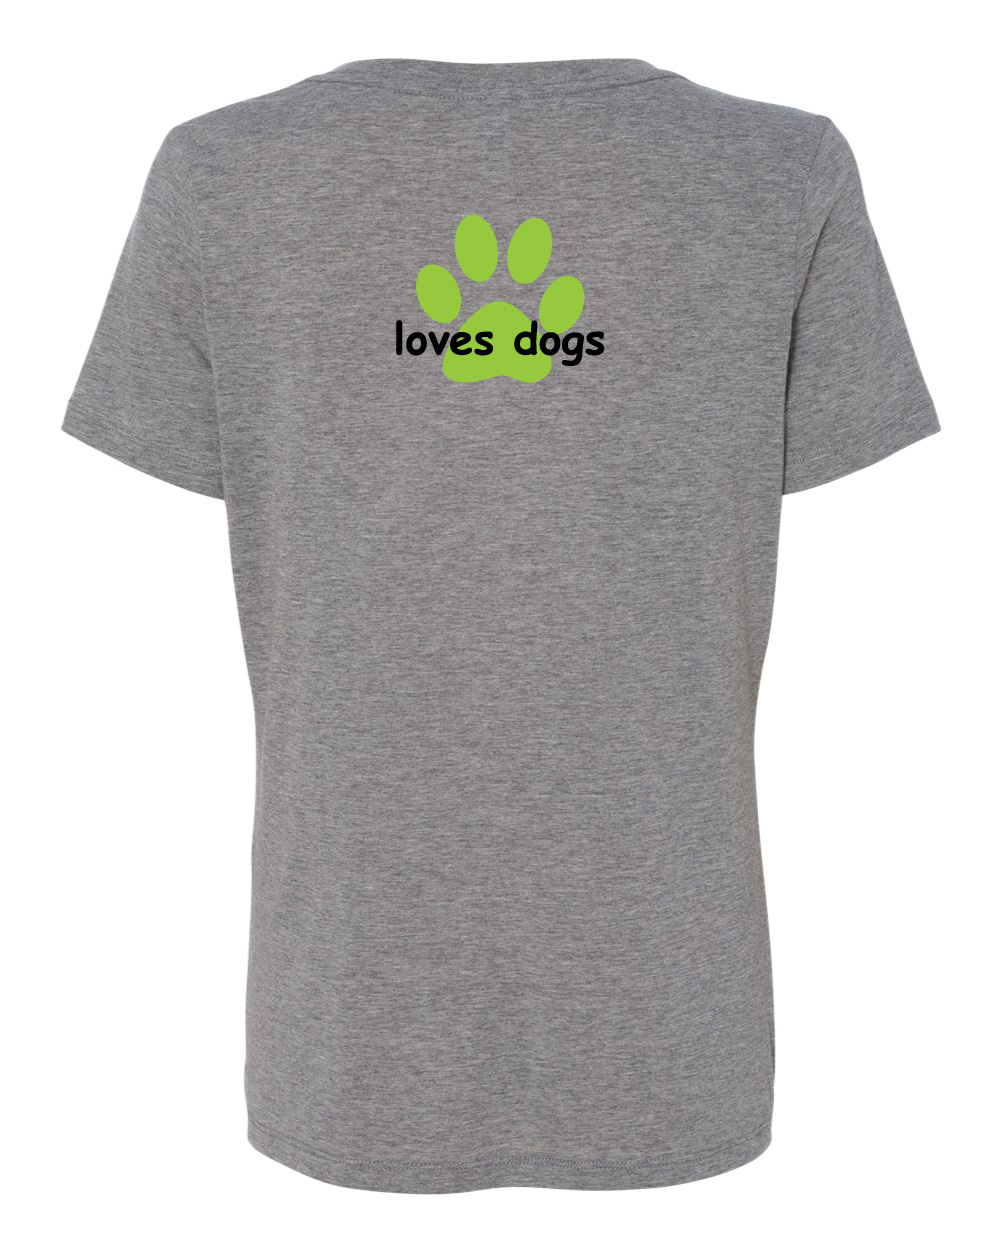 Putnam Service Dogs - T Shirts